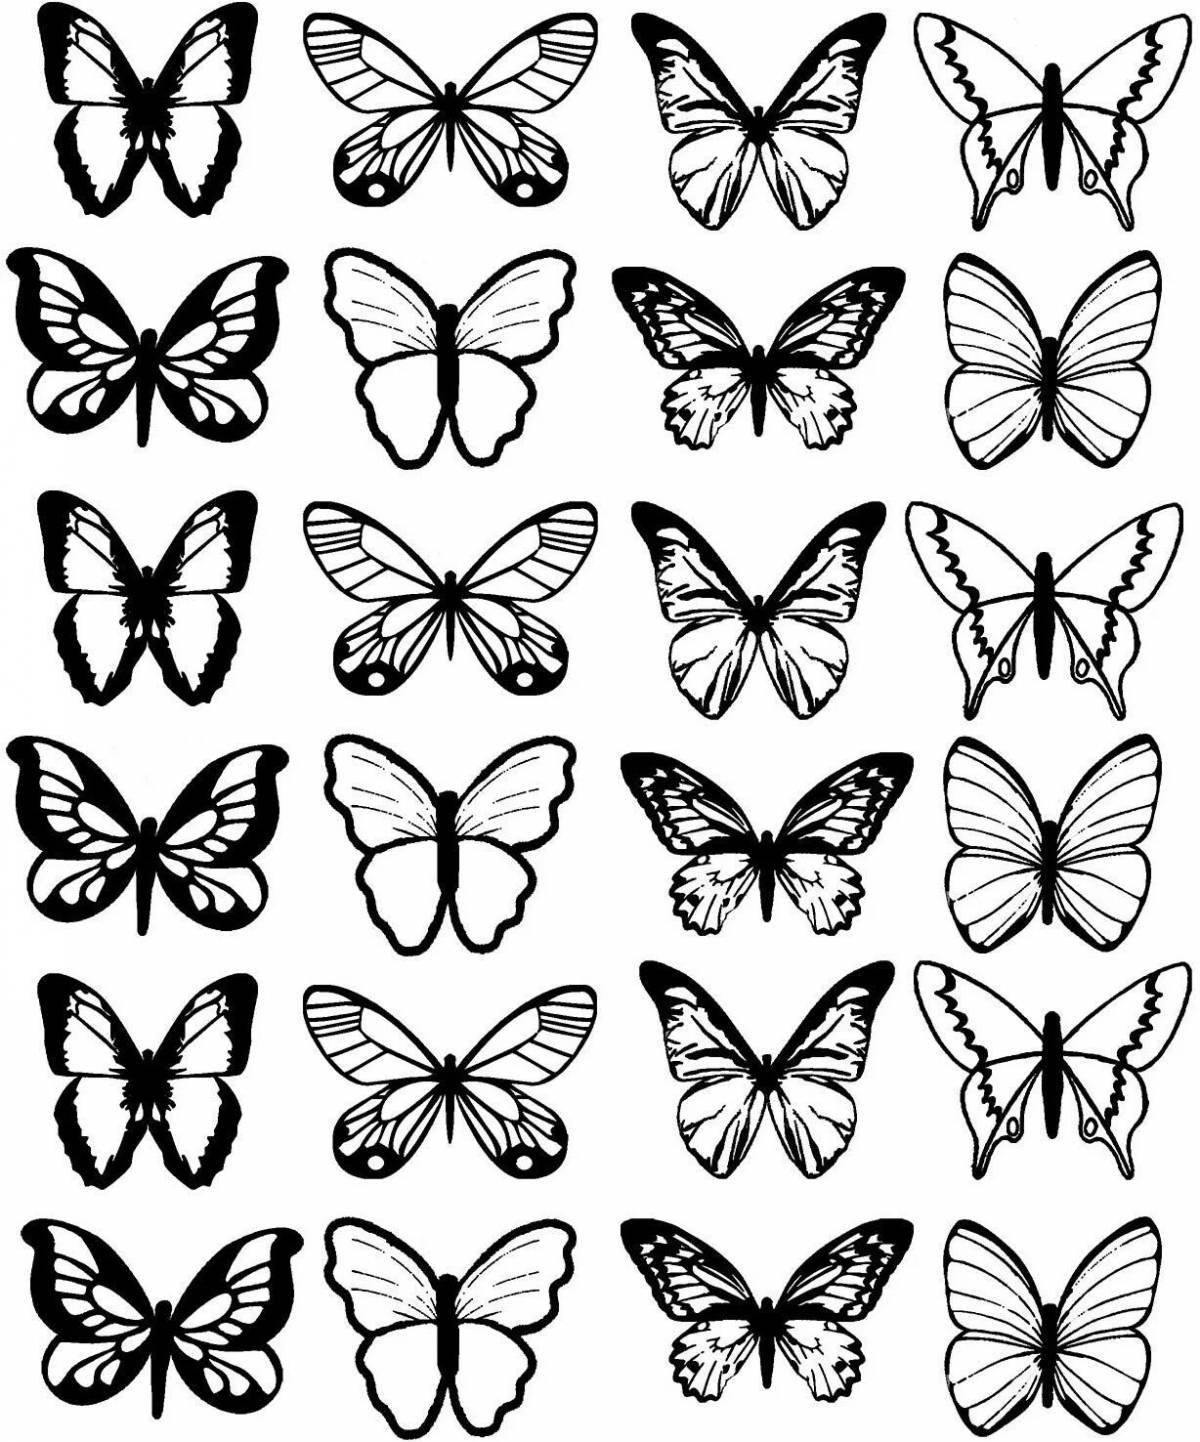 Many shining butterflies on one sheet